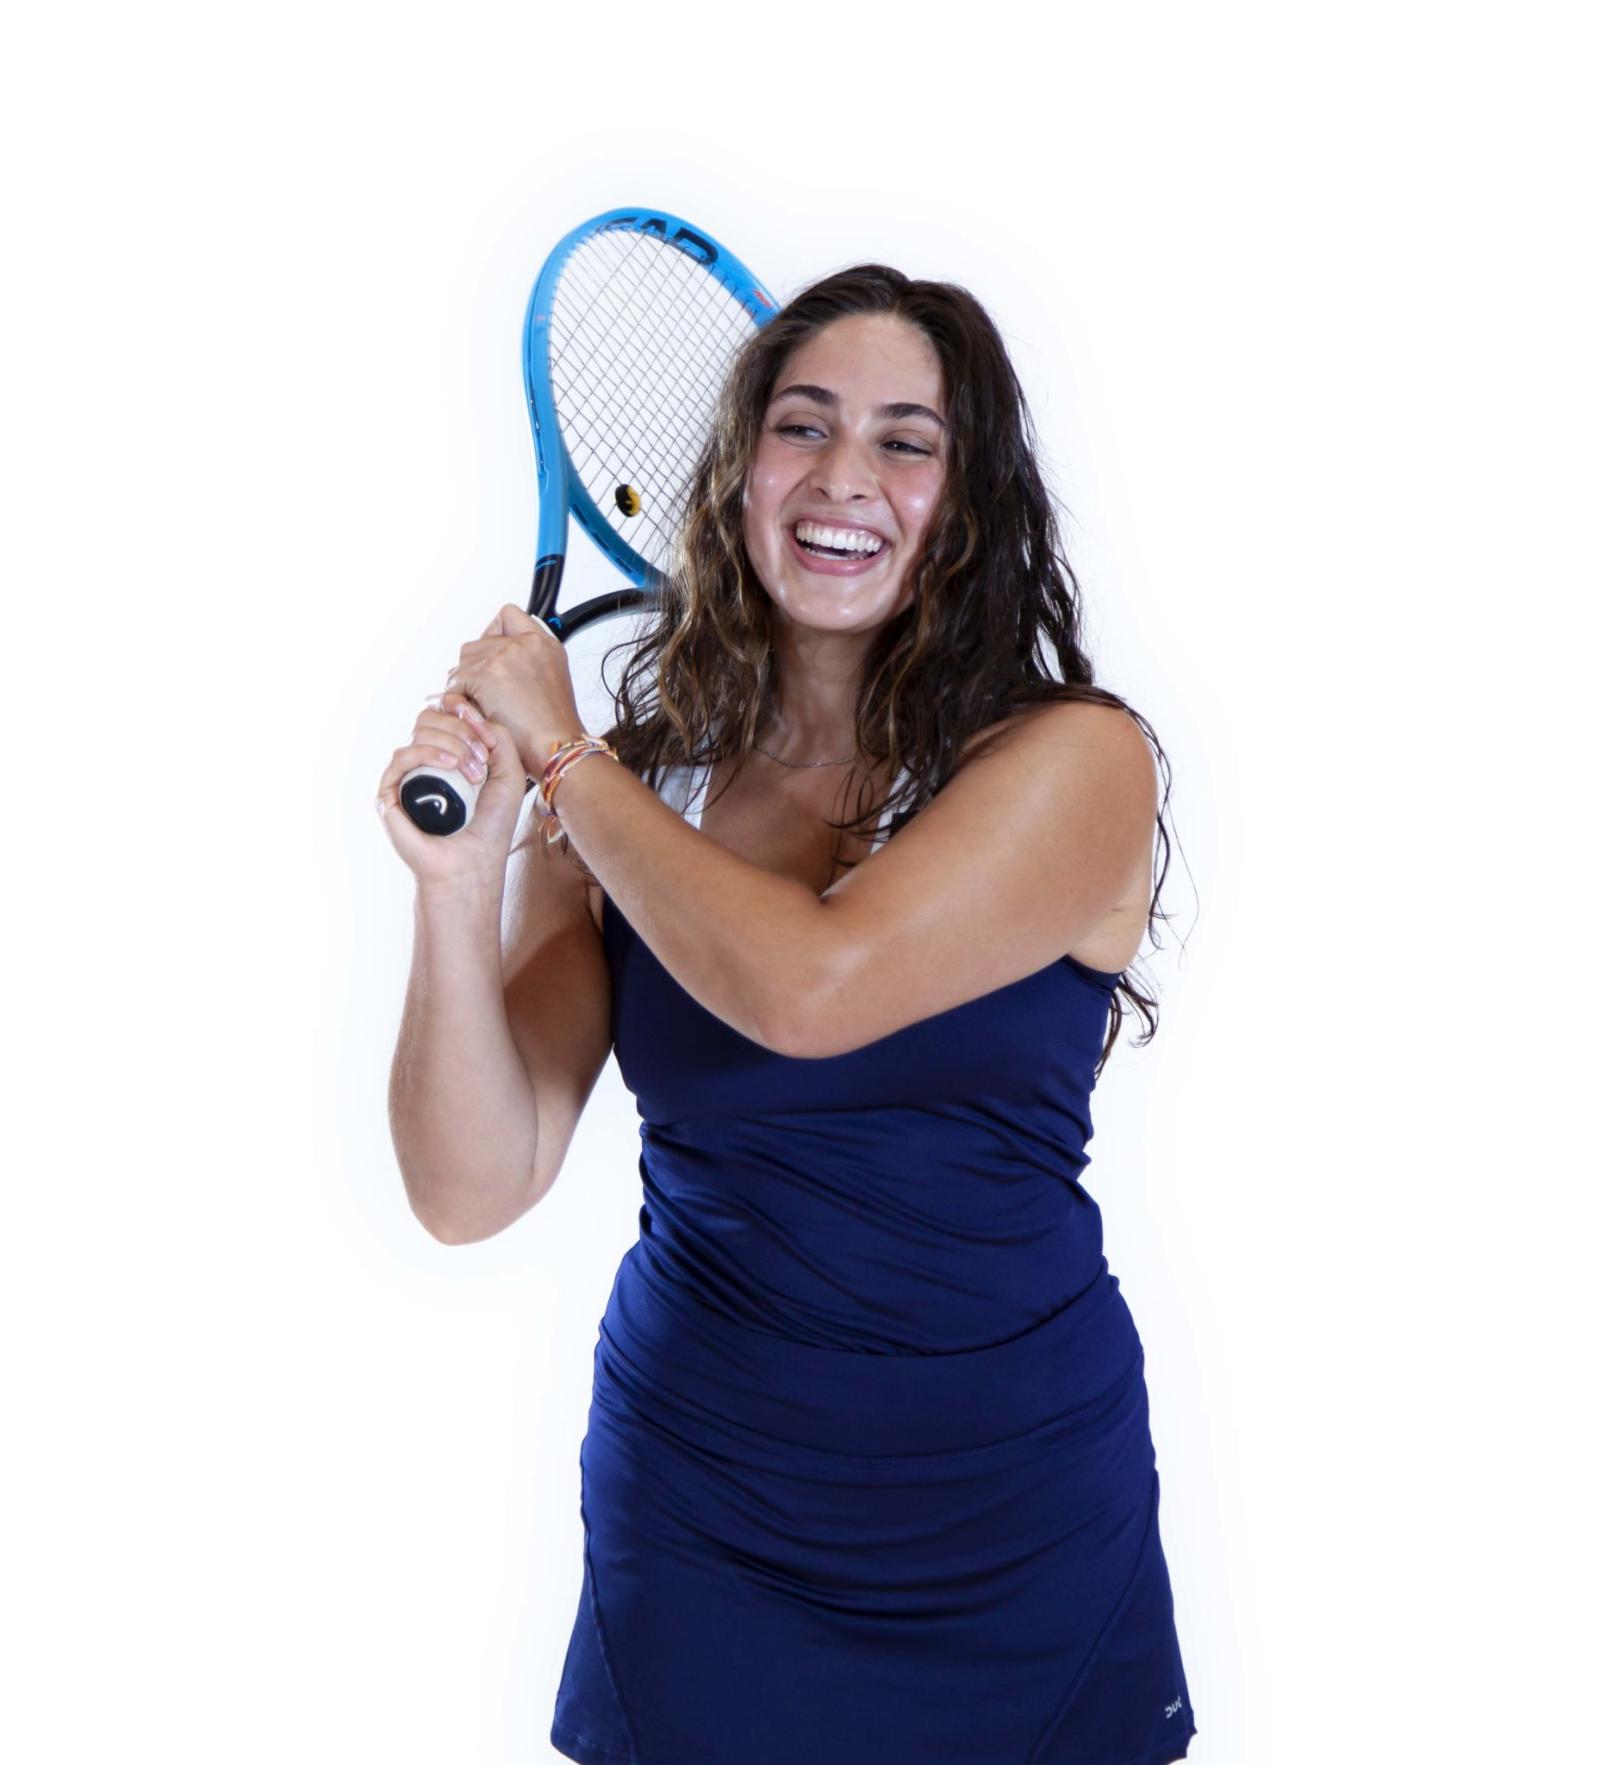 Tennis player Lauren Aturaliya holds her racket, ready to swing